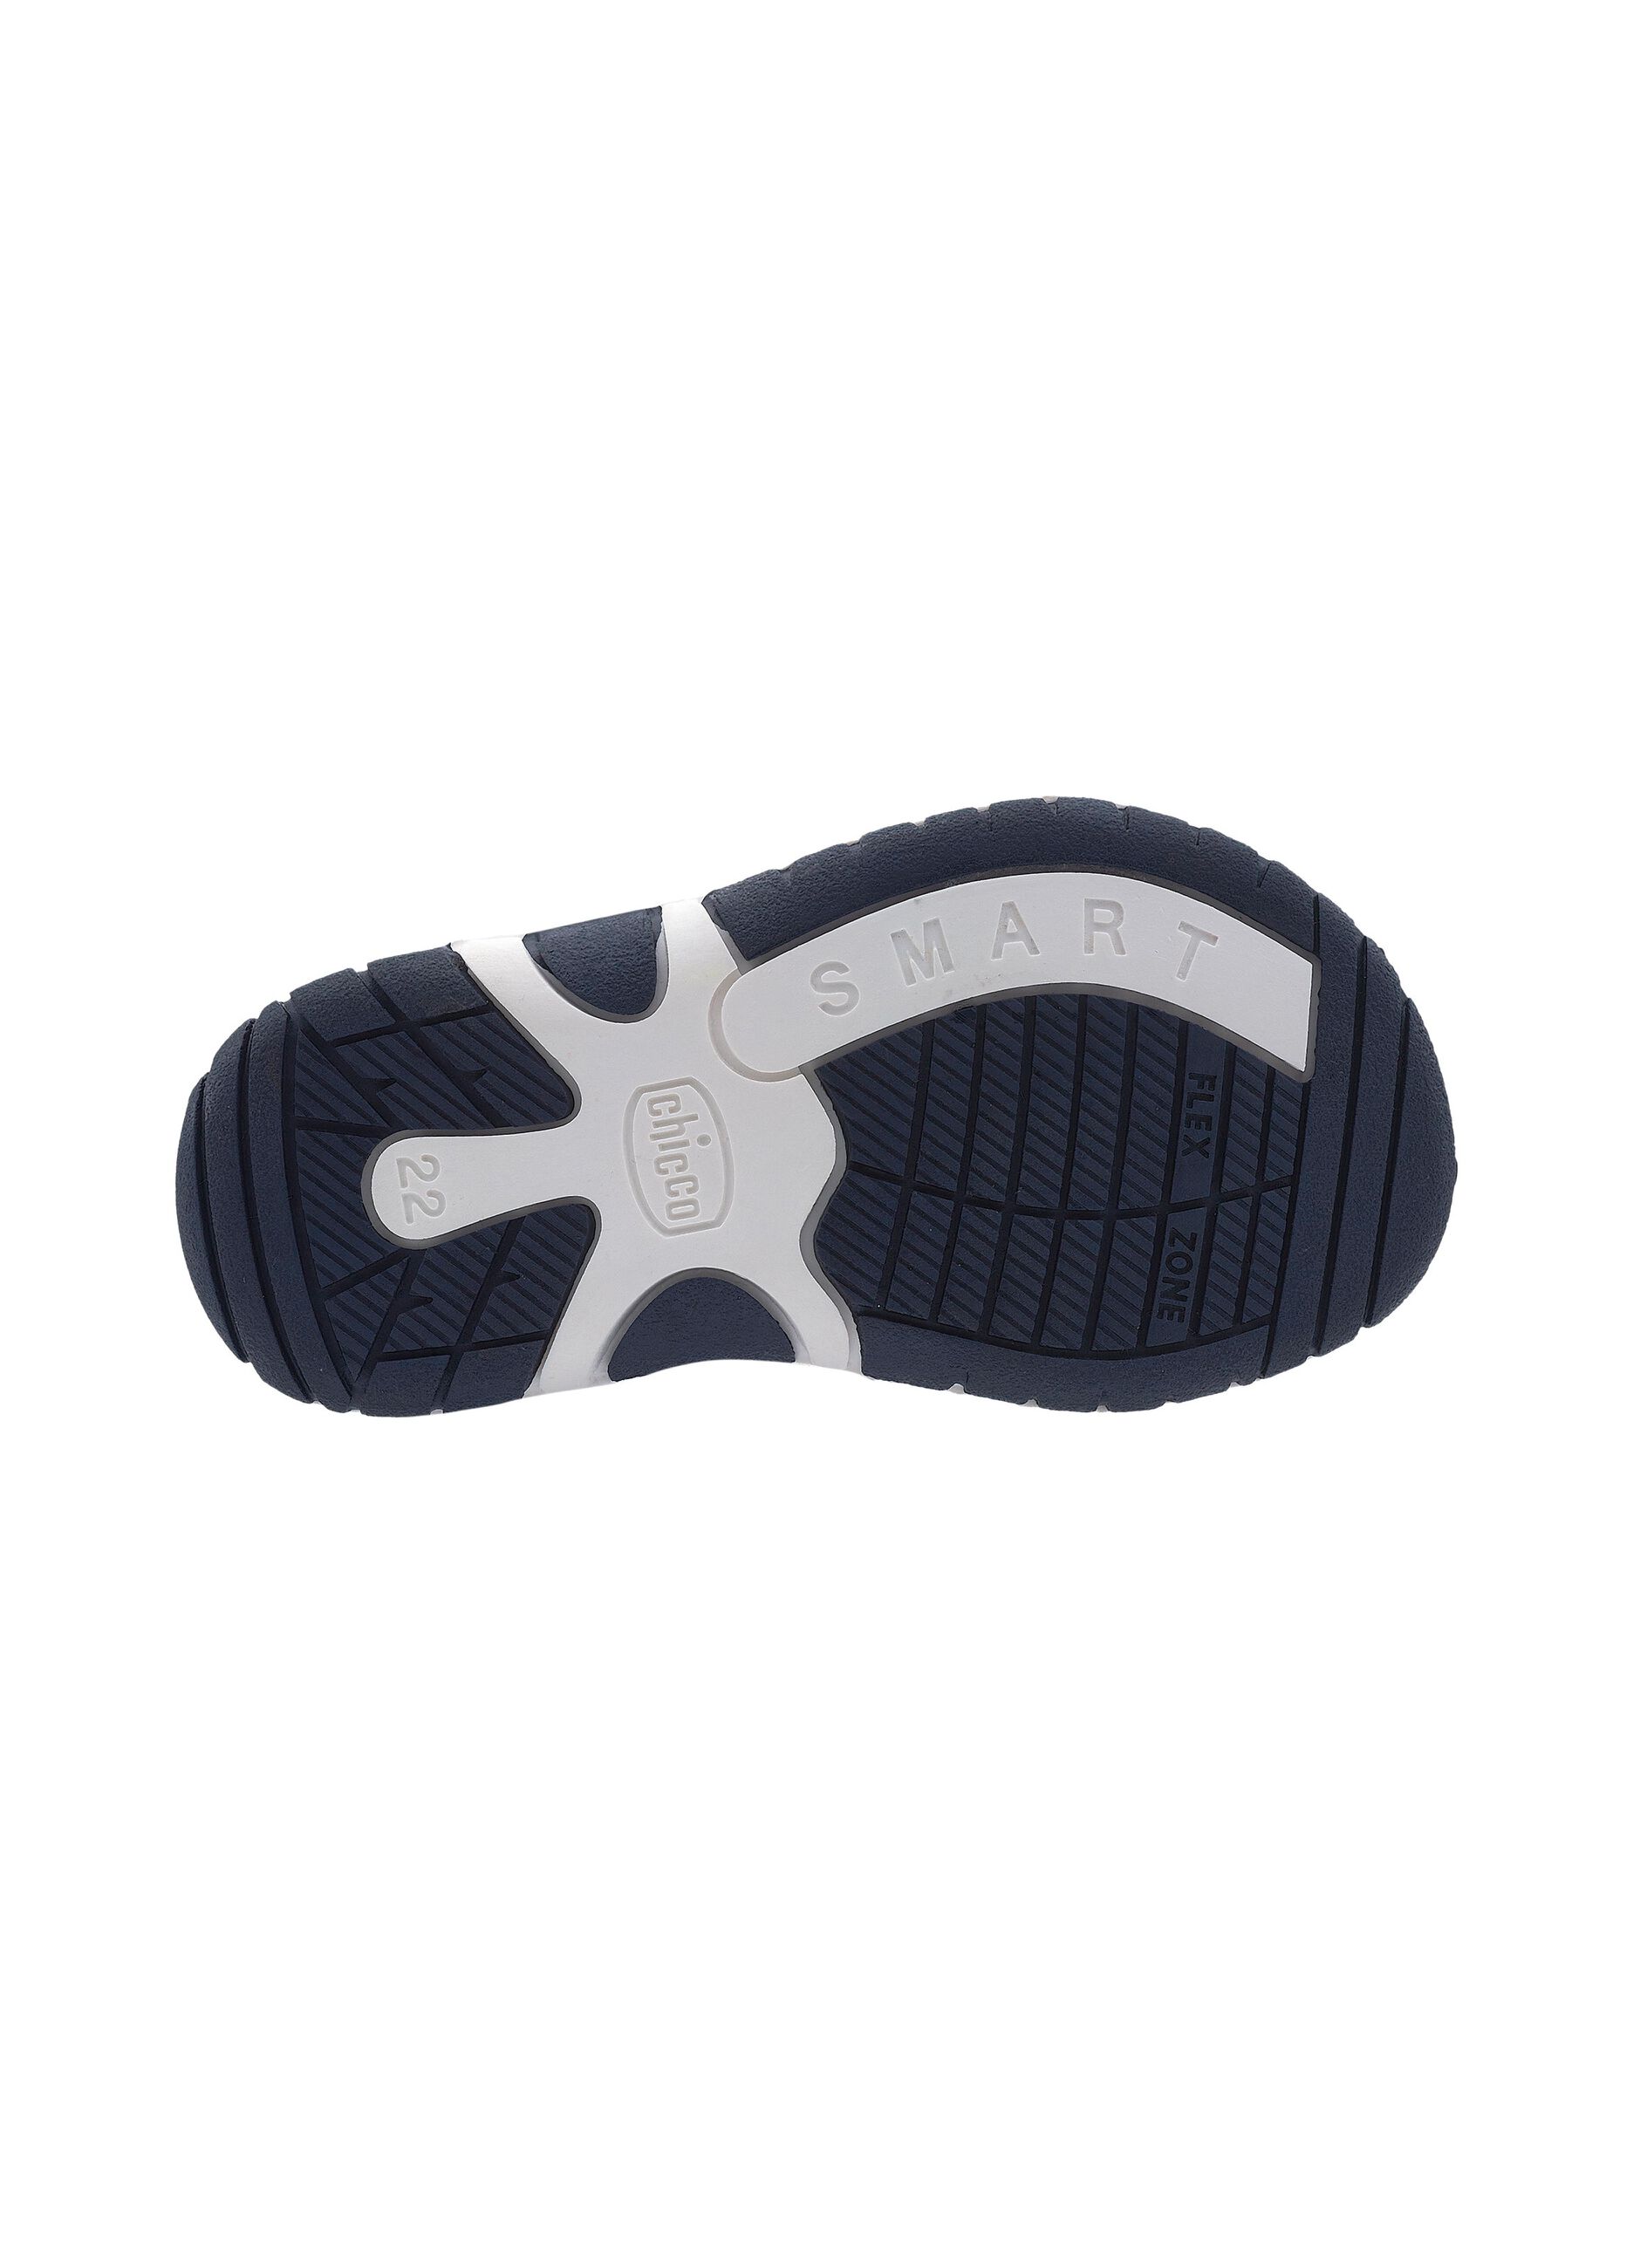 Franklin colourblock sandals with double Velcro strap